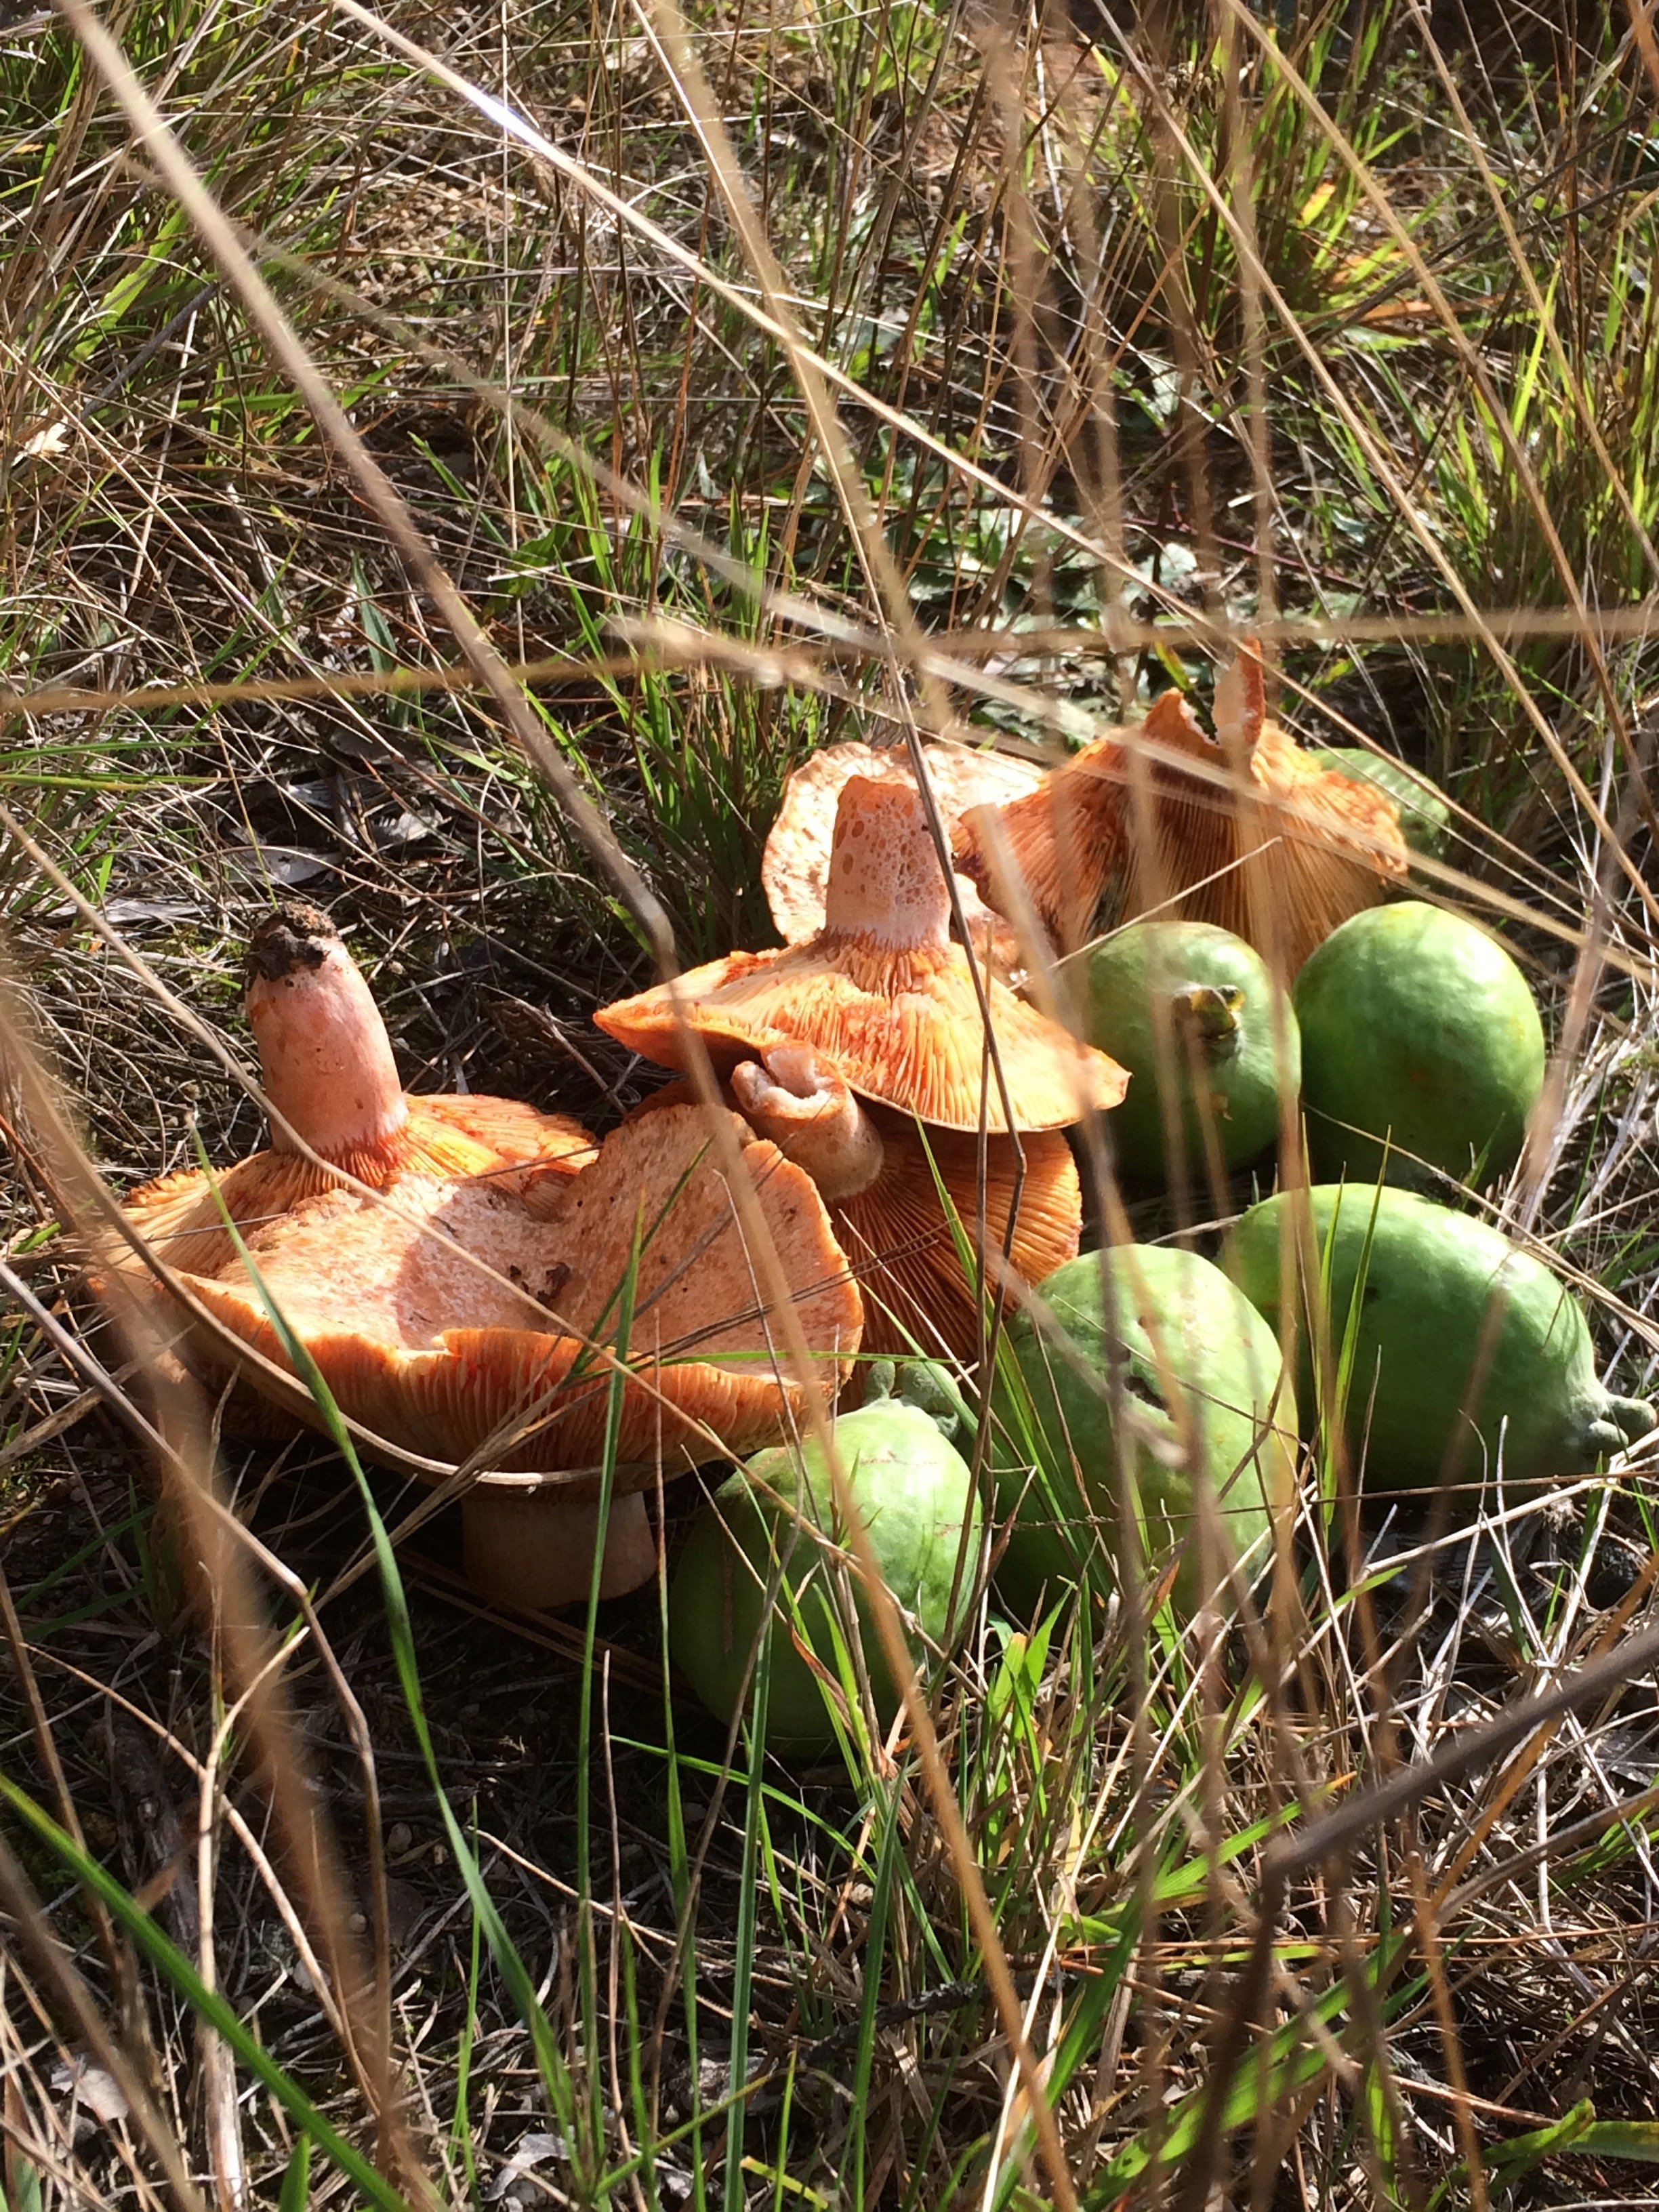 Orange mushrooms and green fejoas on grass